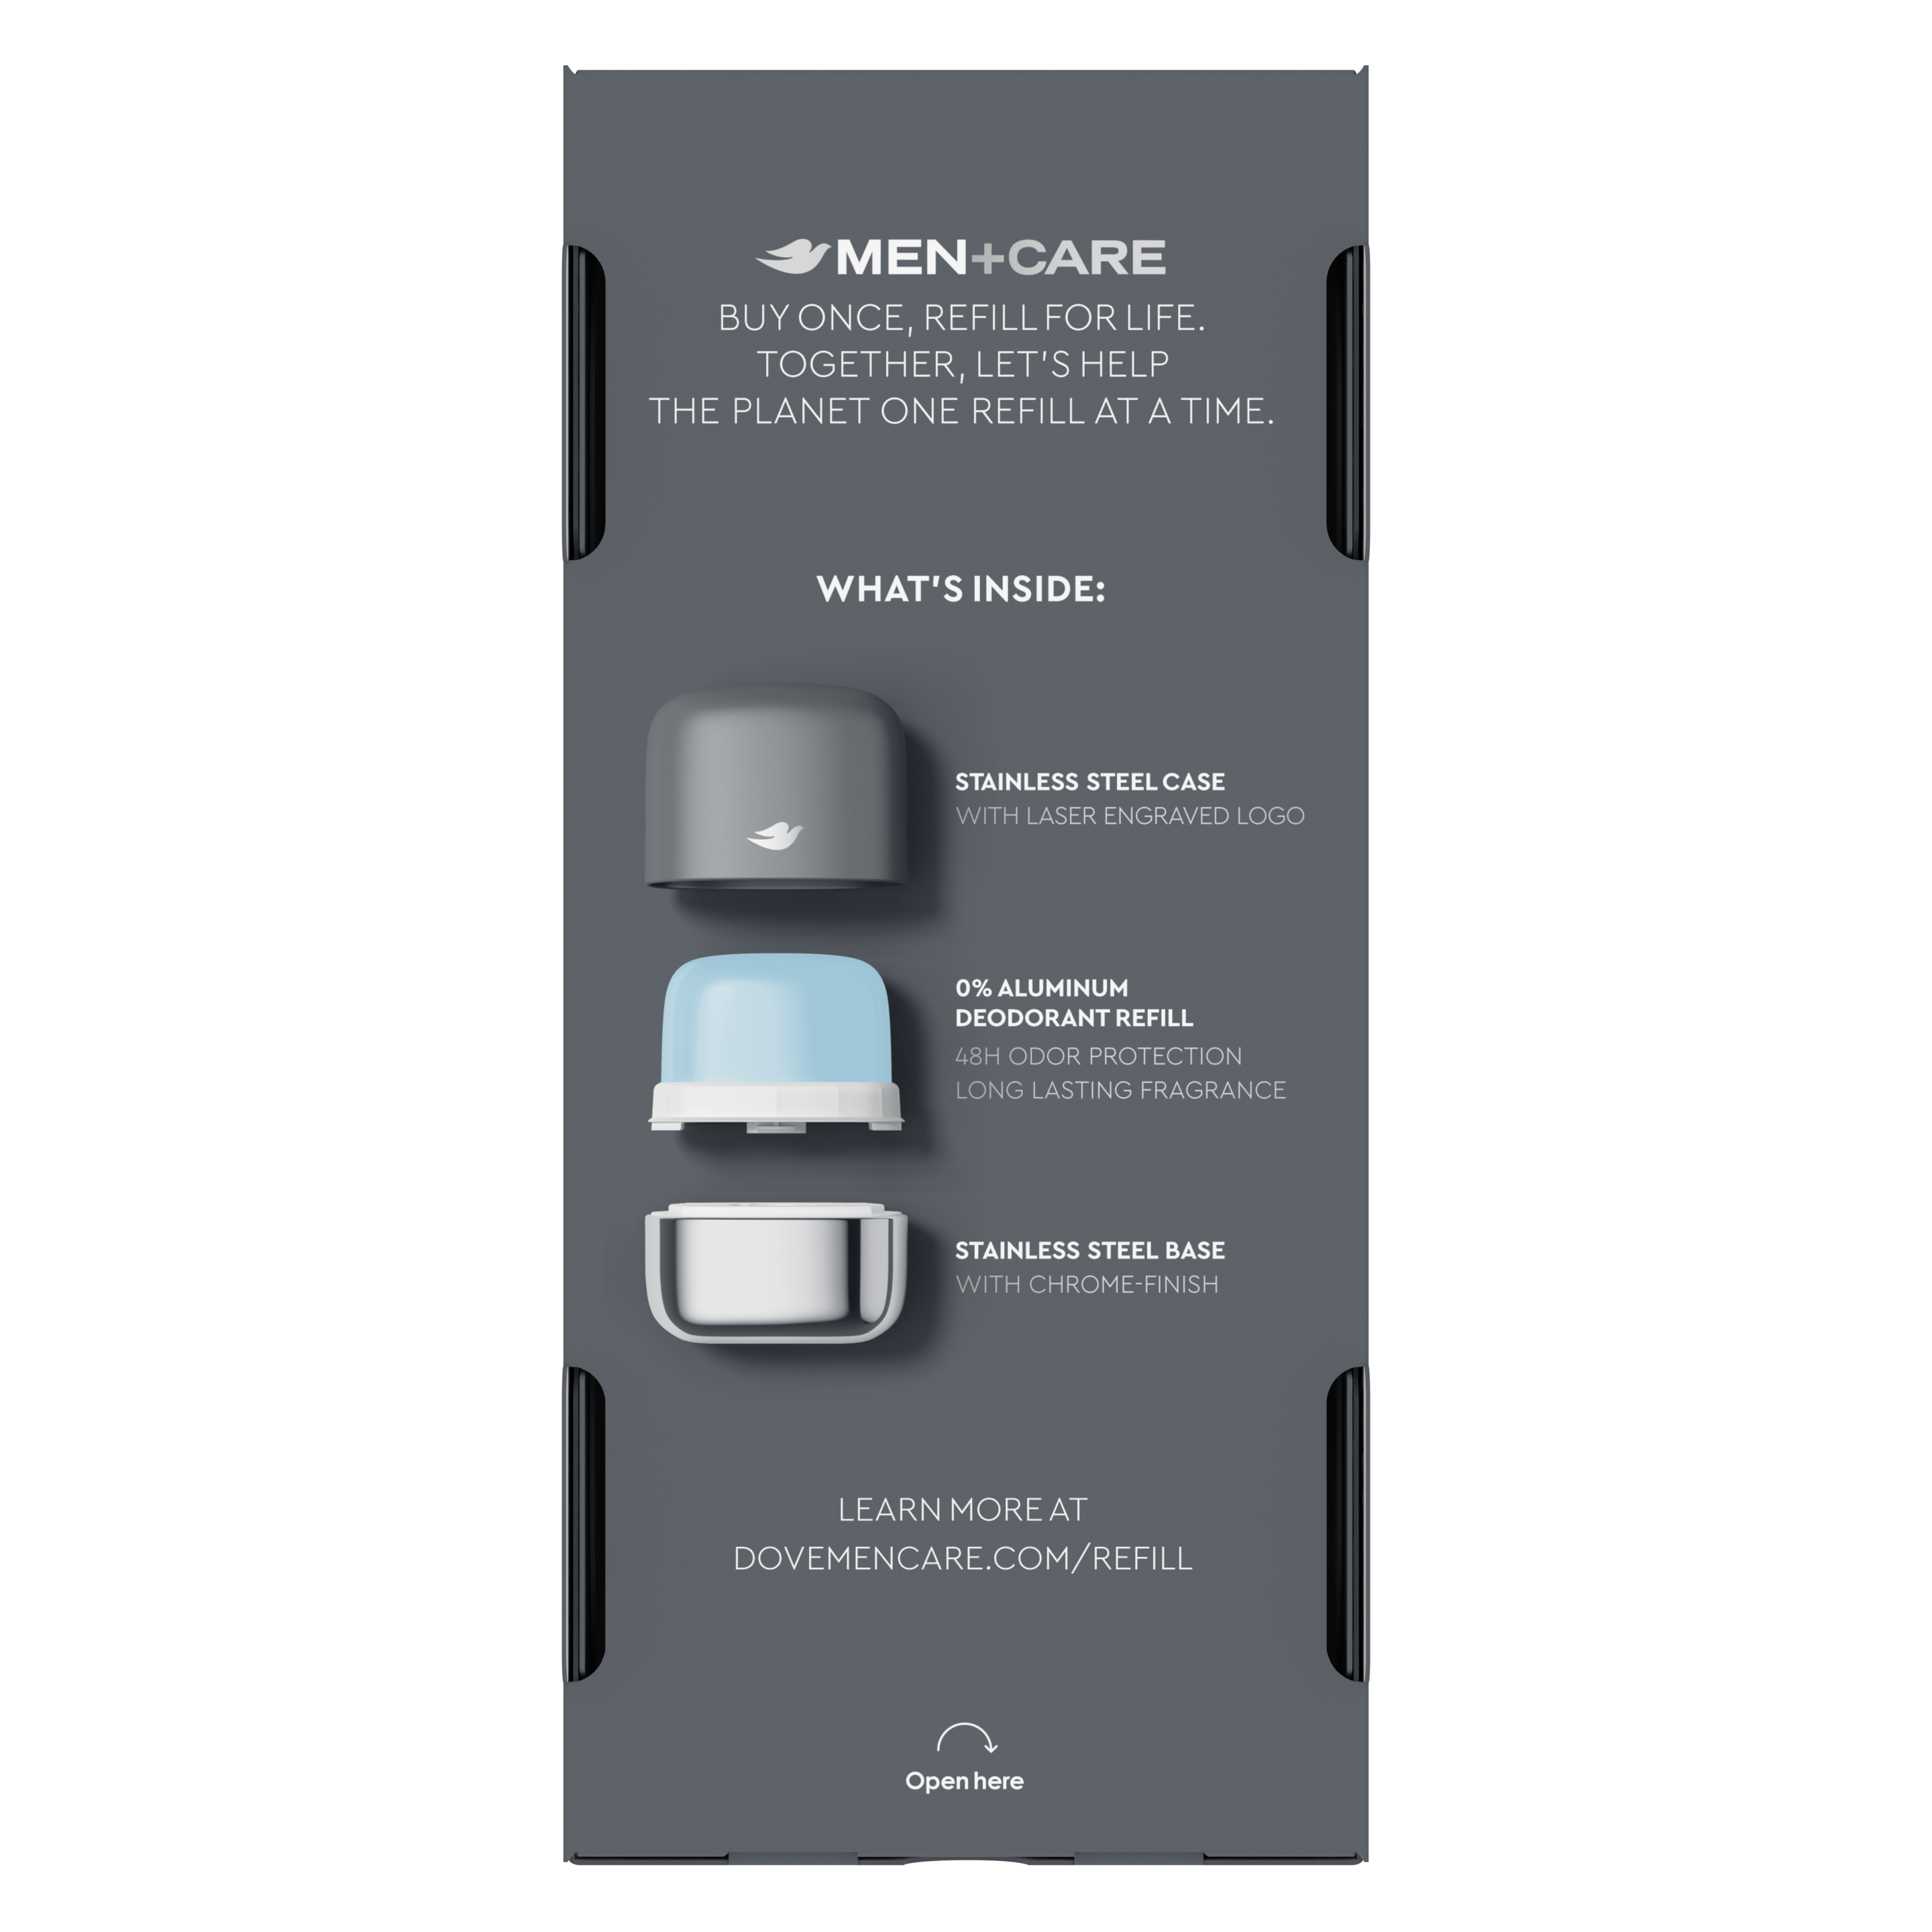 Men+Care Ultimate Clean Touch 0% Aluminum Refillable Deodorant Kit